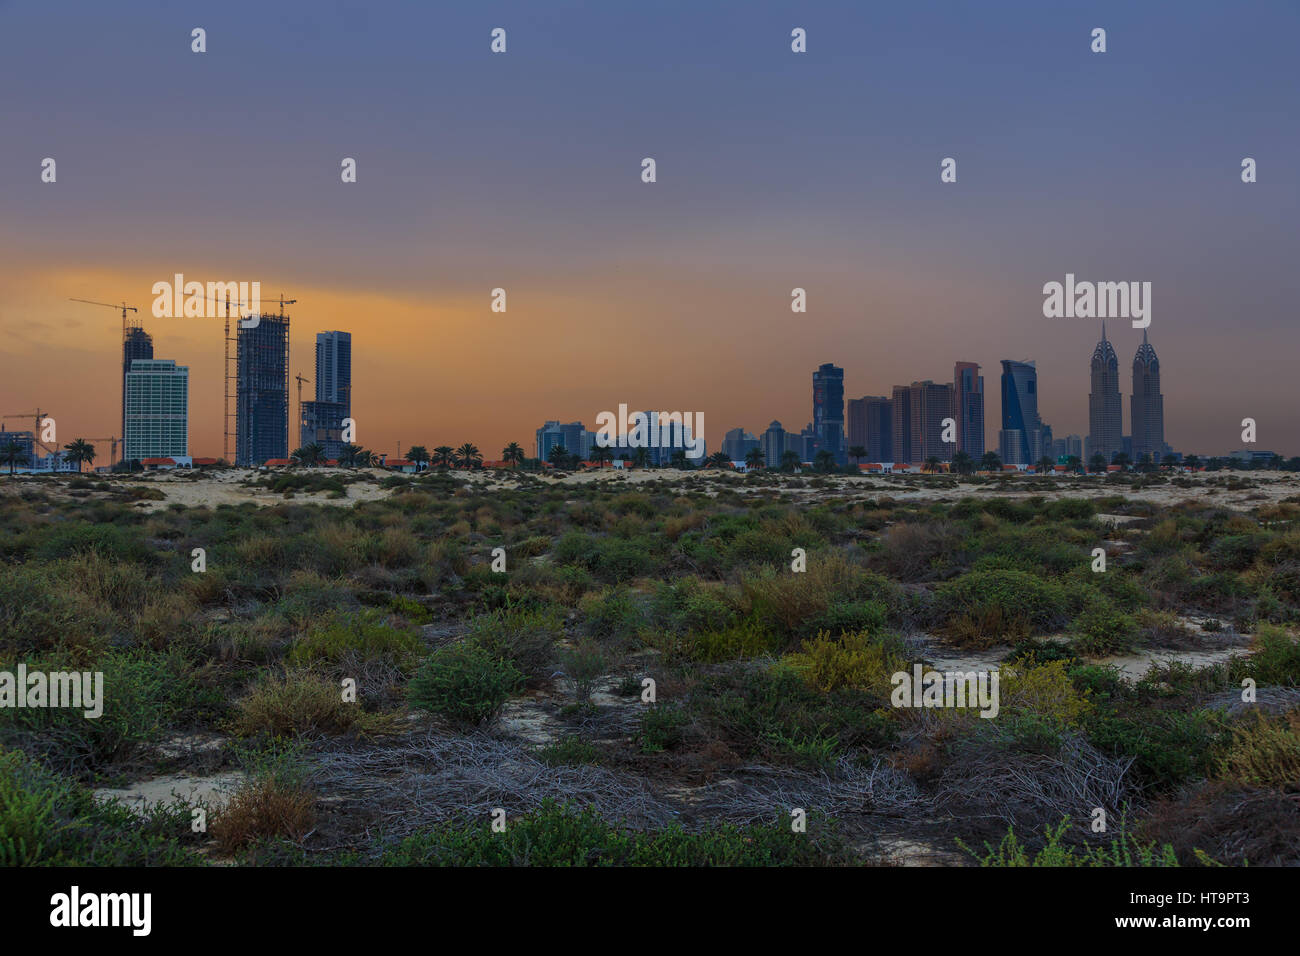 Jumeirah Beach Stock Photo